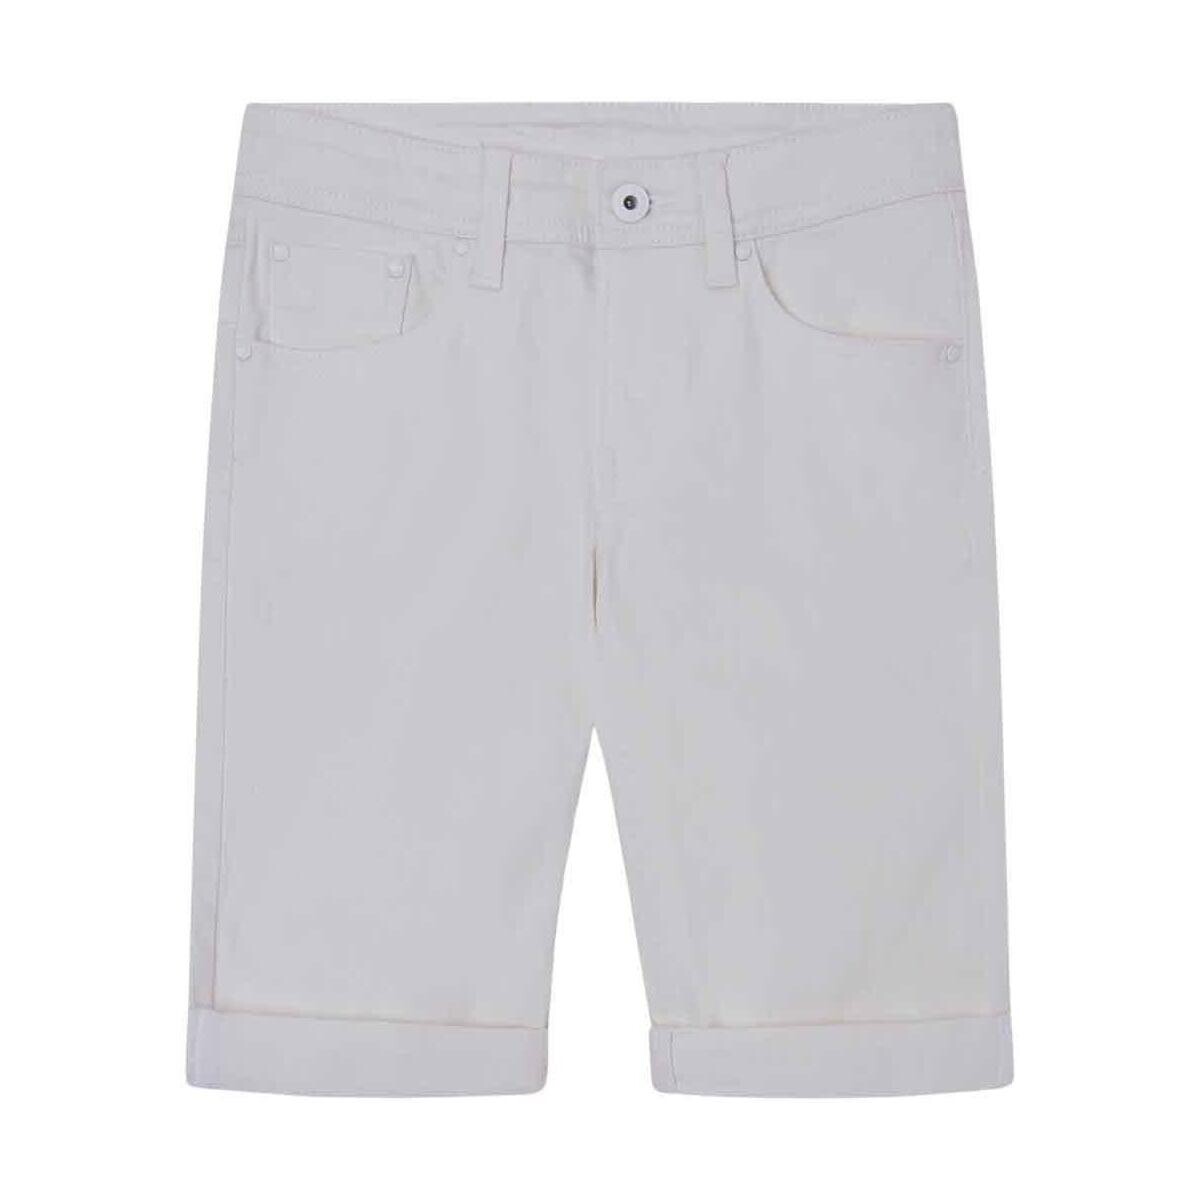 Vêtements Garçon Shorts / Bermudas Pepe jeans  Blanc